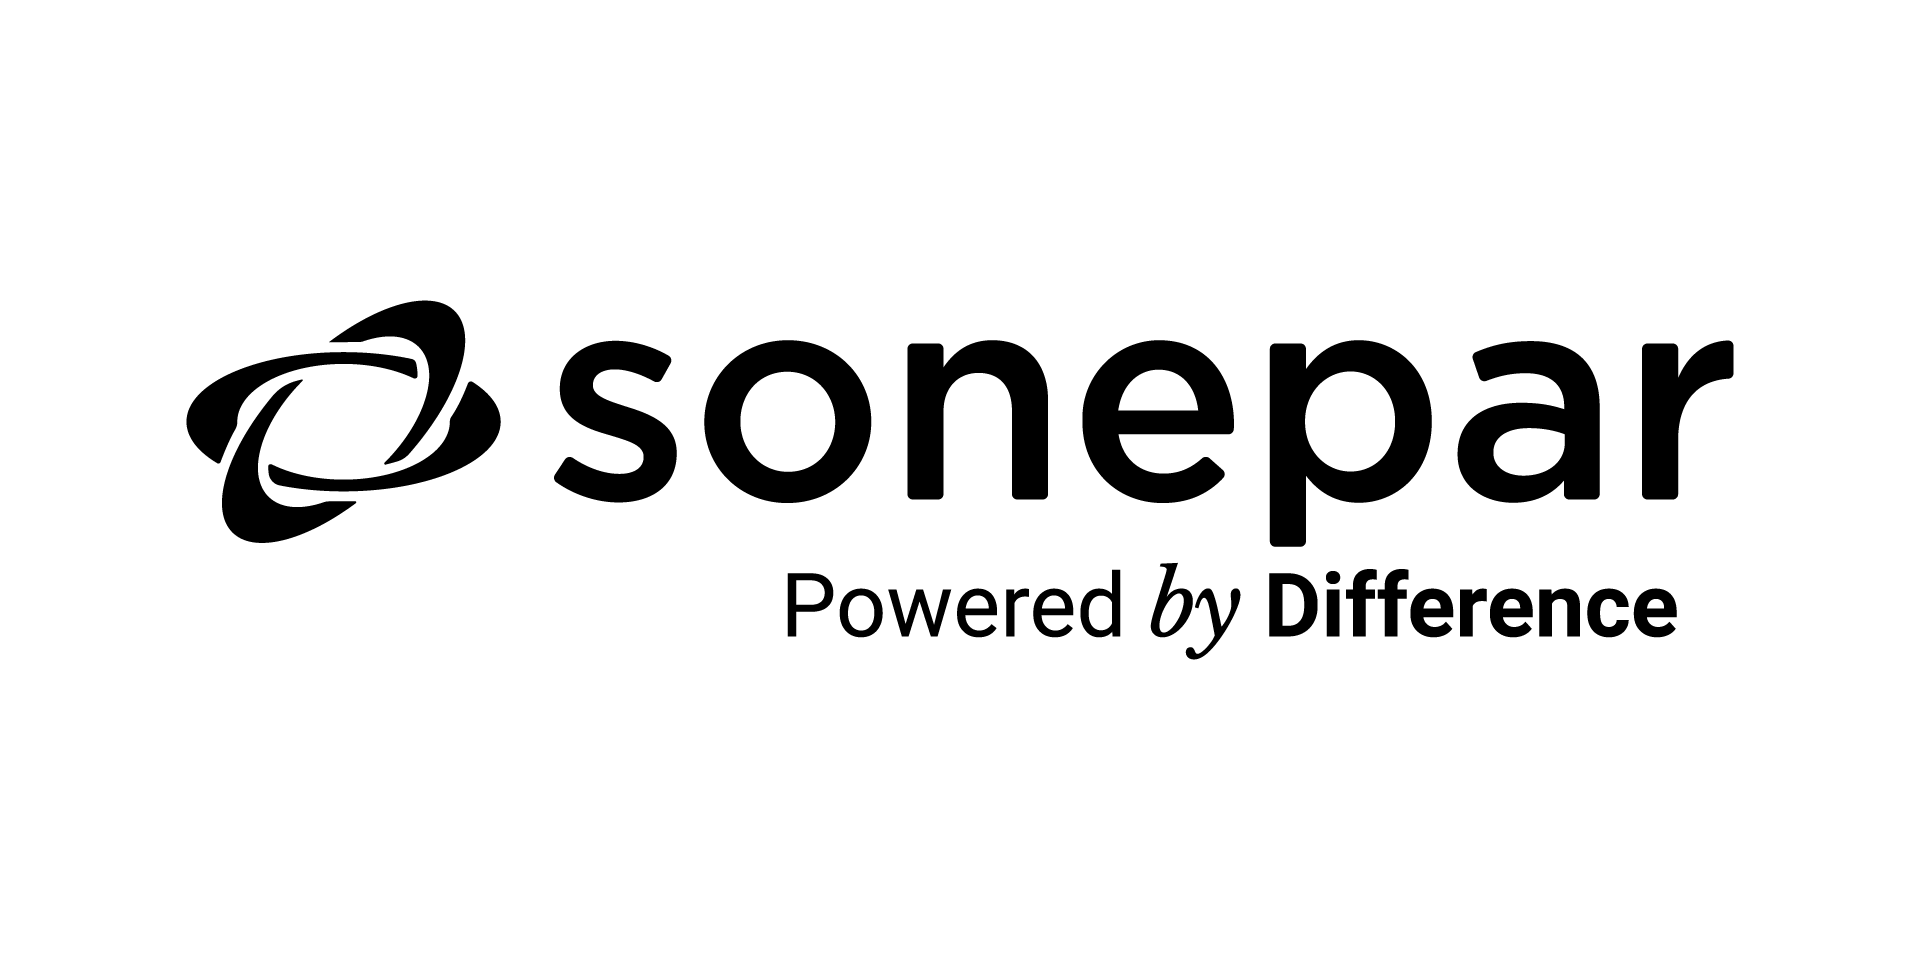 Sonepar